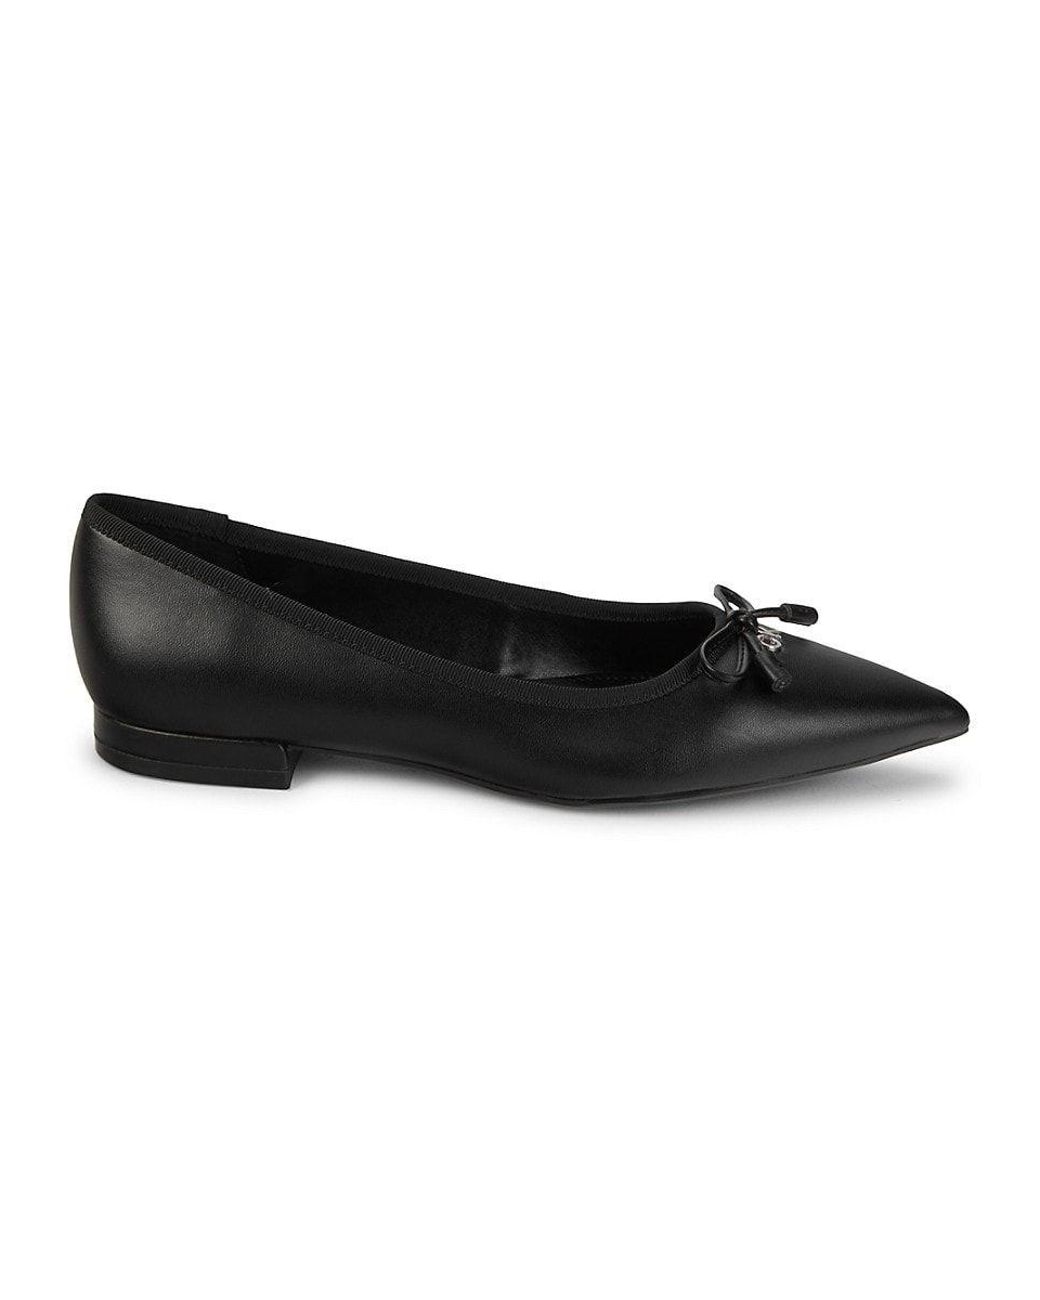 Calvin Klein Kirra 2 Leather Ballet Flats in Black | Lyst